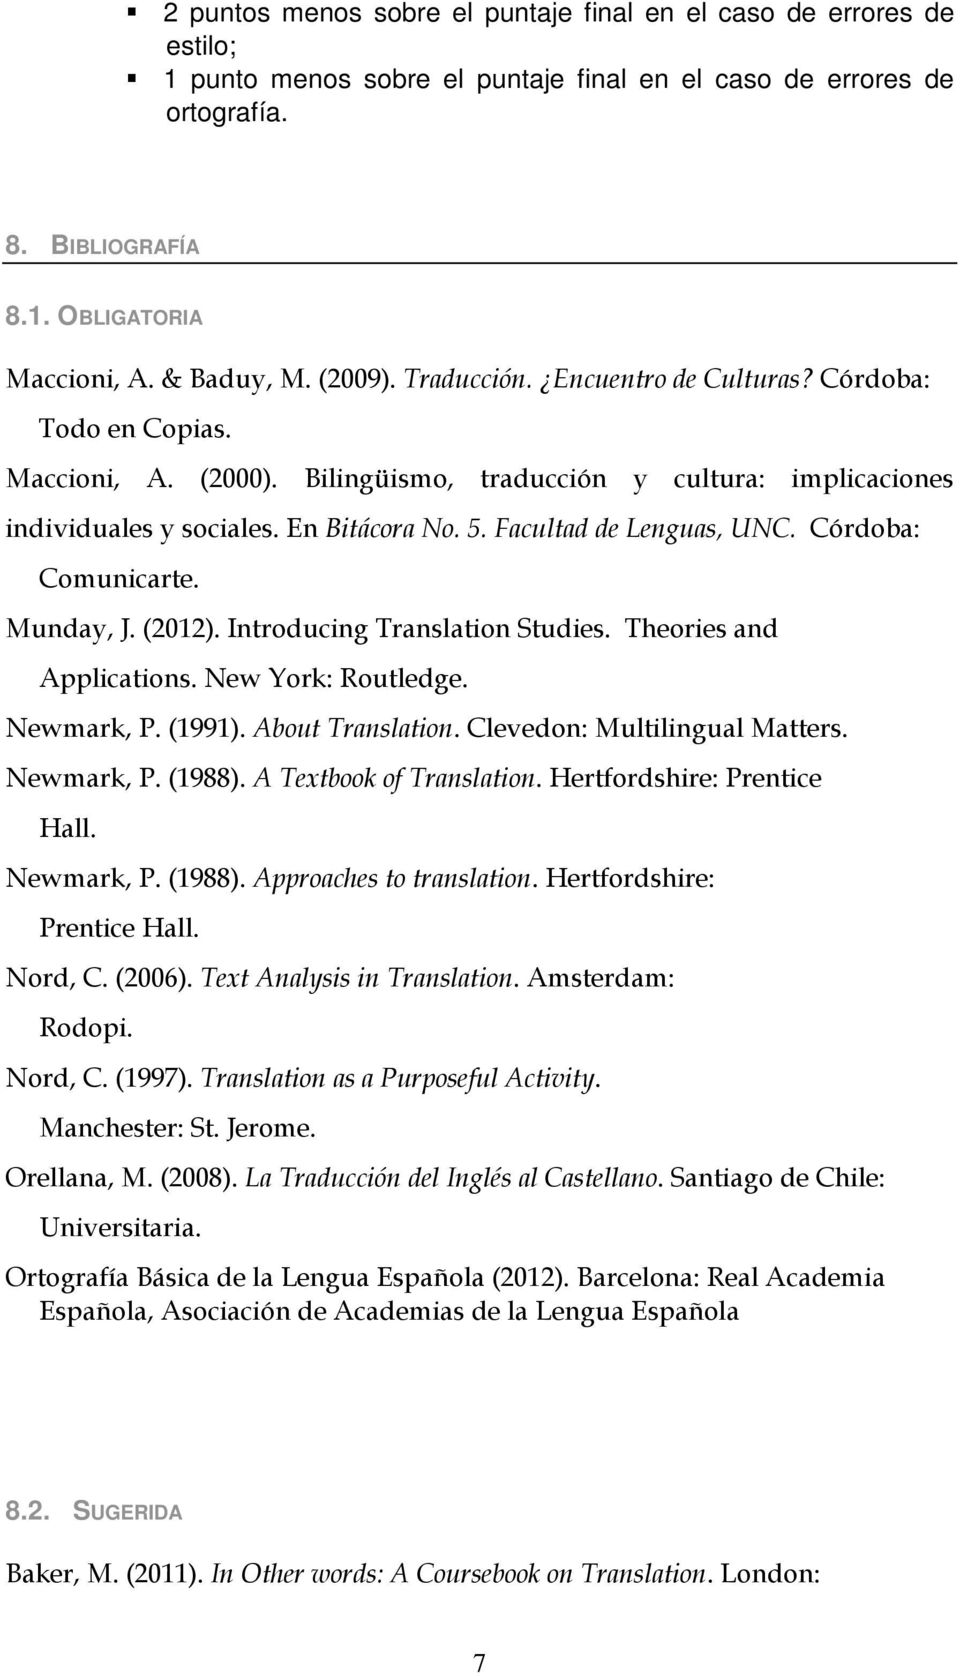 Facultad de Lenguas, UNC. Córdoba: Comunicarte. Munday, J. (2012). Introducing Translation Studies. Theories and Applications. New York: Routledge. Newmark, P. (1991). About Translation.